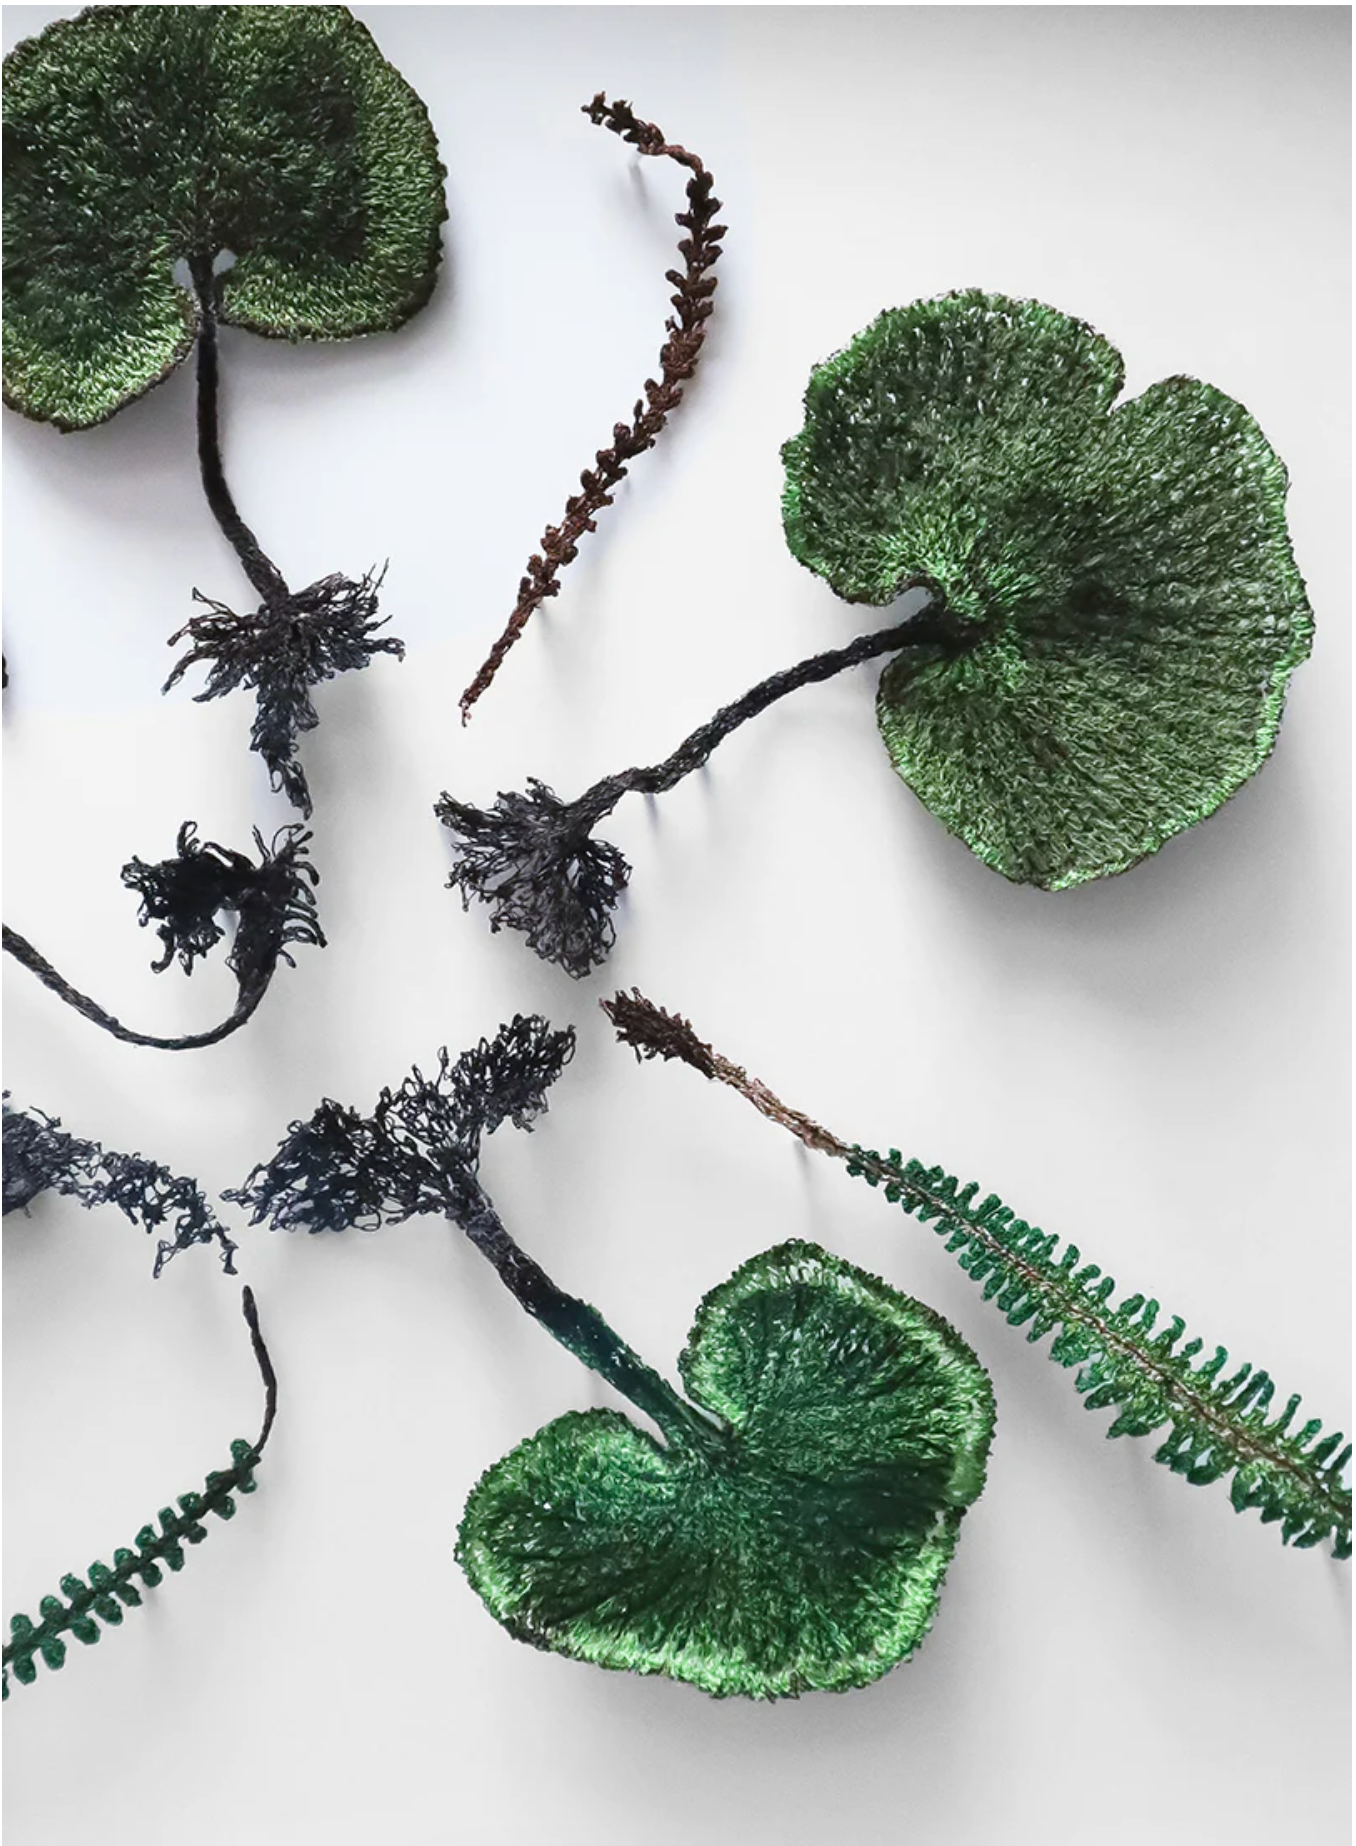 New Zealand Ferns sculptural embroidery